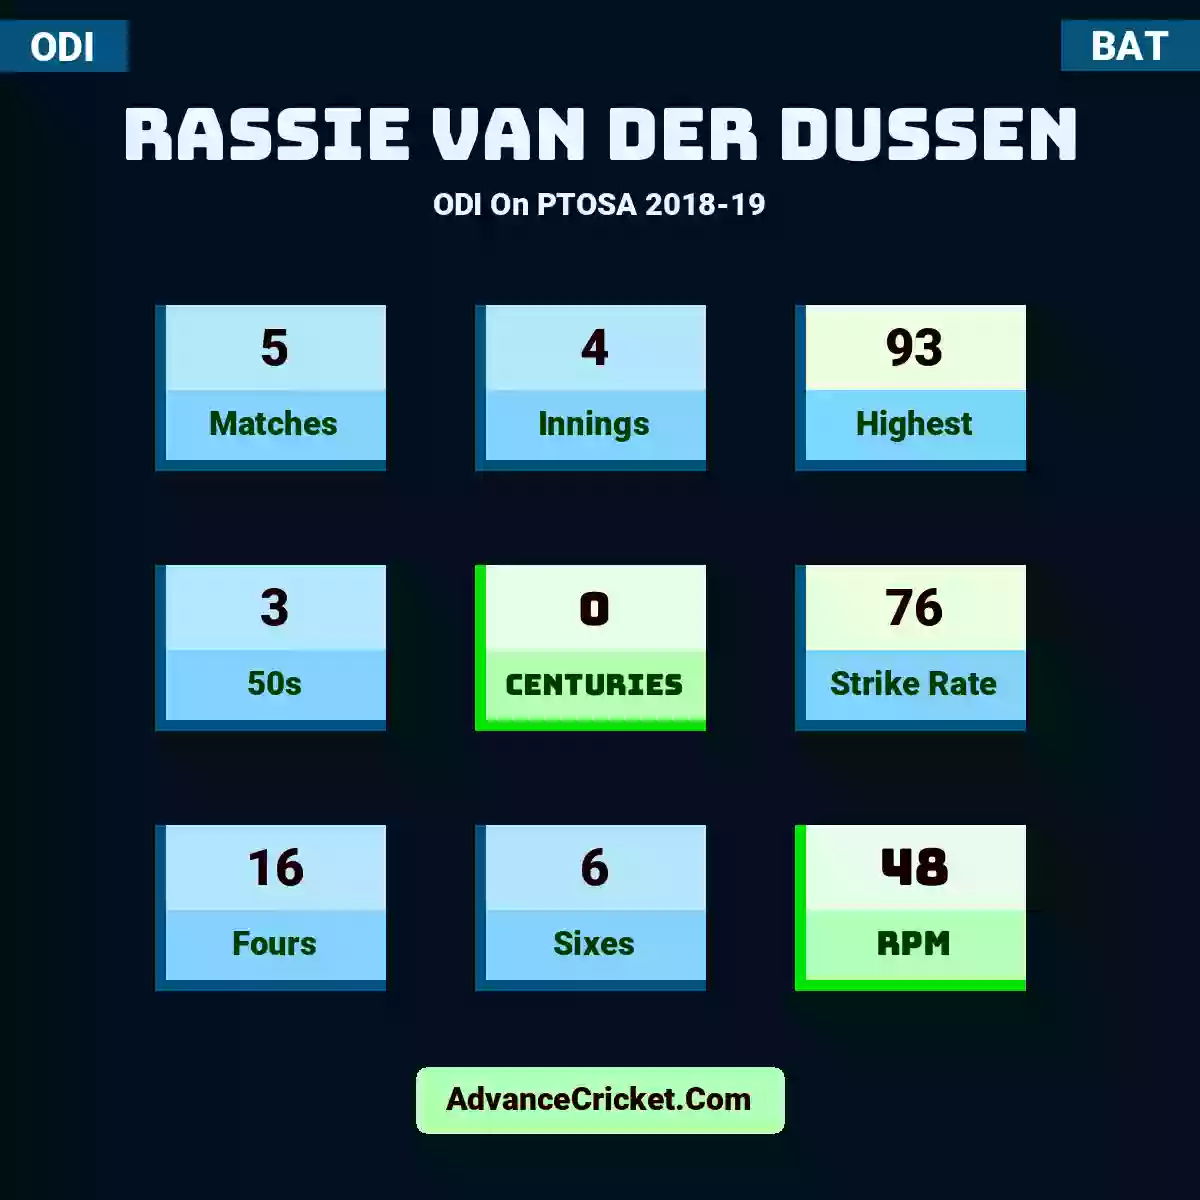 Rassie van der Dussen ODI  On PTOSA 2018-19, Rassie van der Dussen played 5 matches, scored 93 runs as highest, 3 half-centuries, and 0 centuries, with a strike rate of 76. R.Dussen hit 16 fours and 6 sixes, with an RPM of 48.